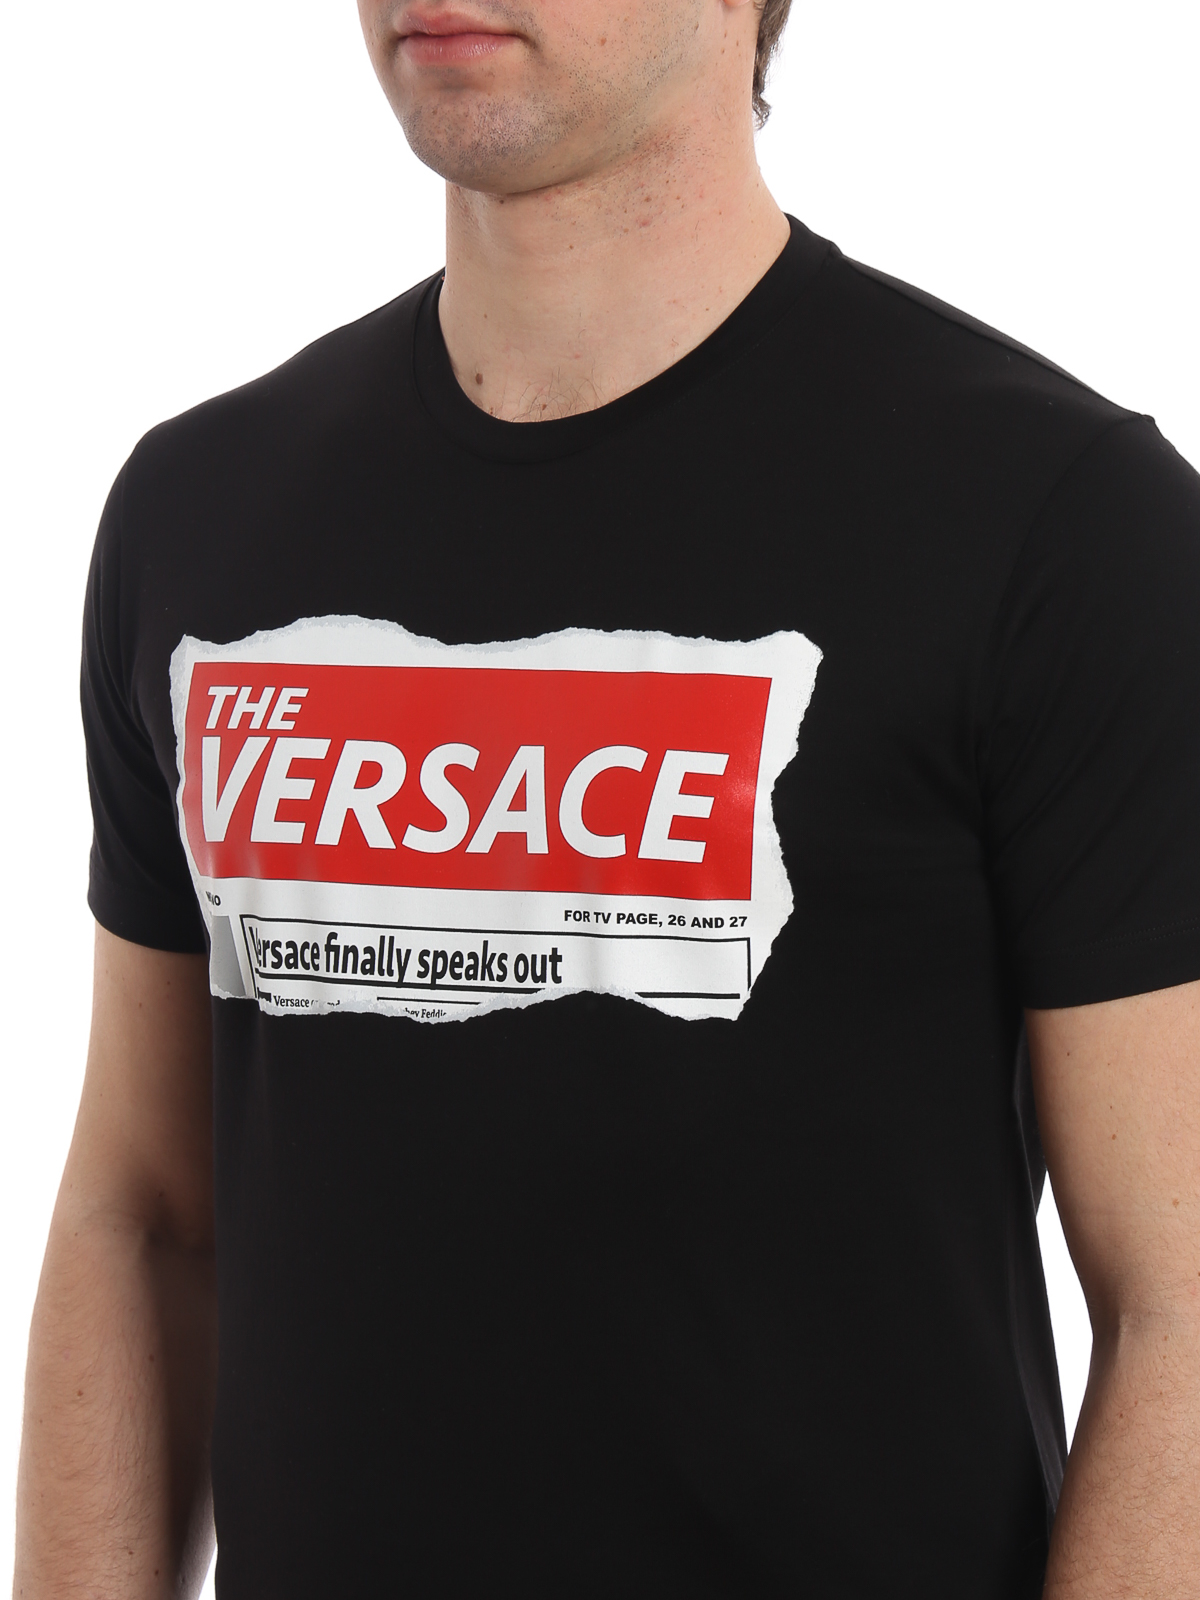 the versace shirt